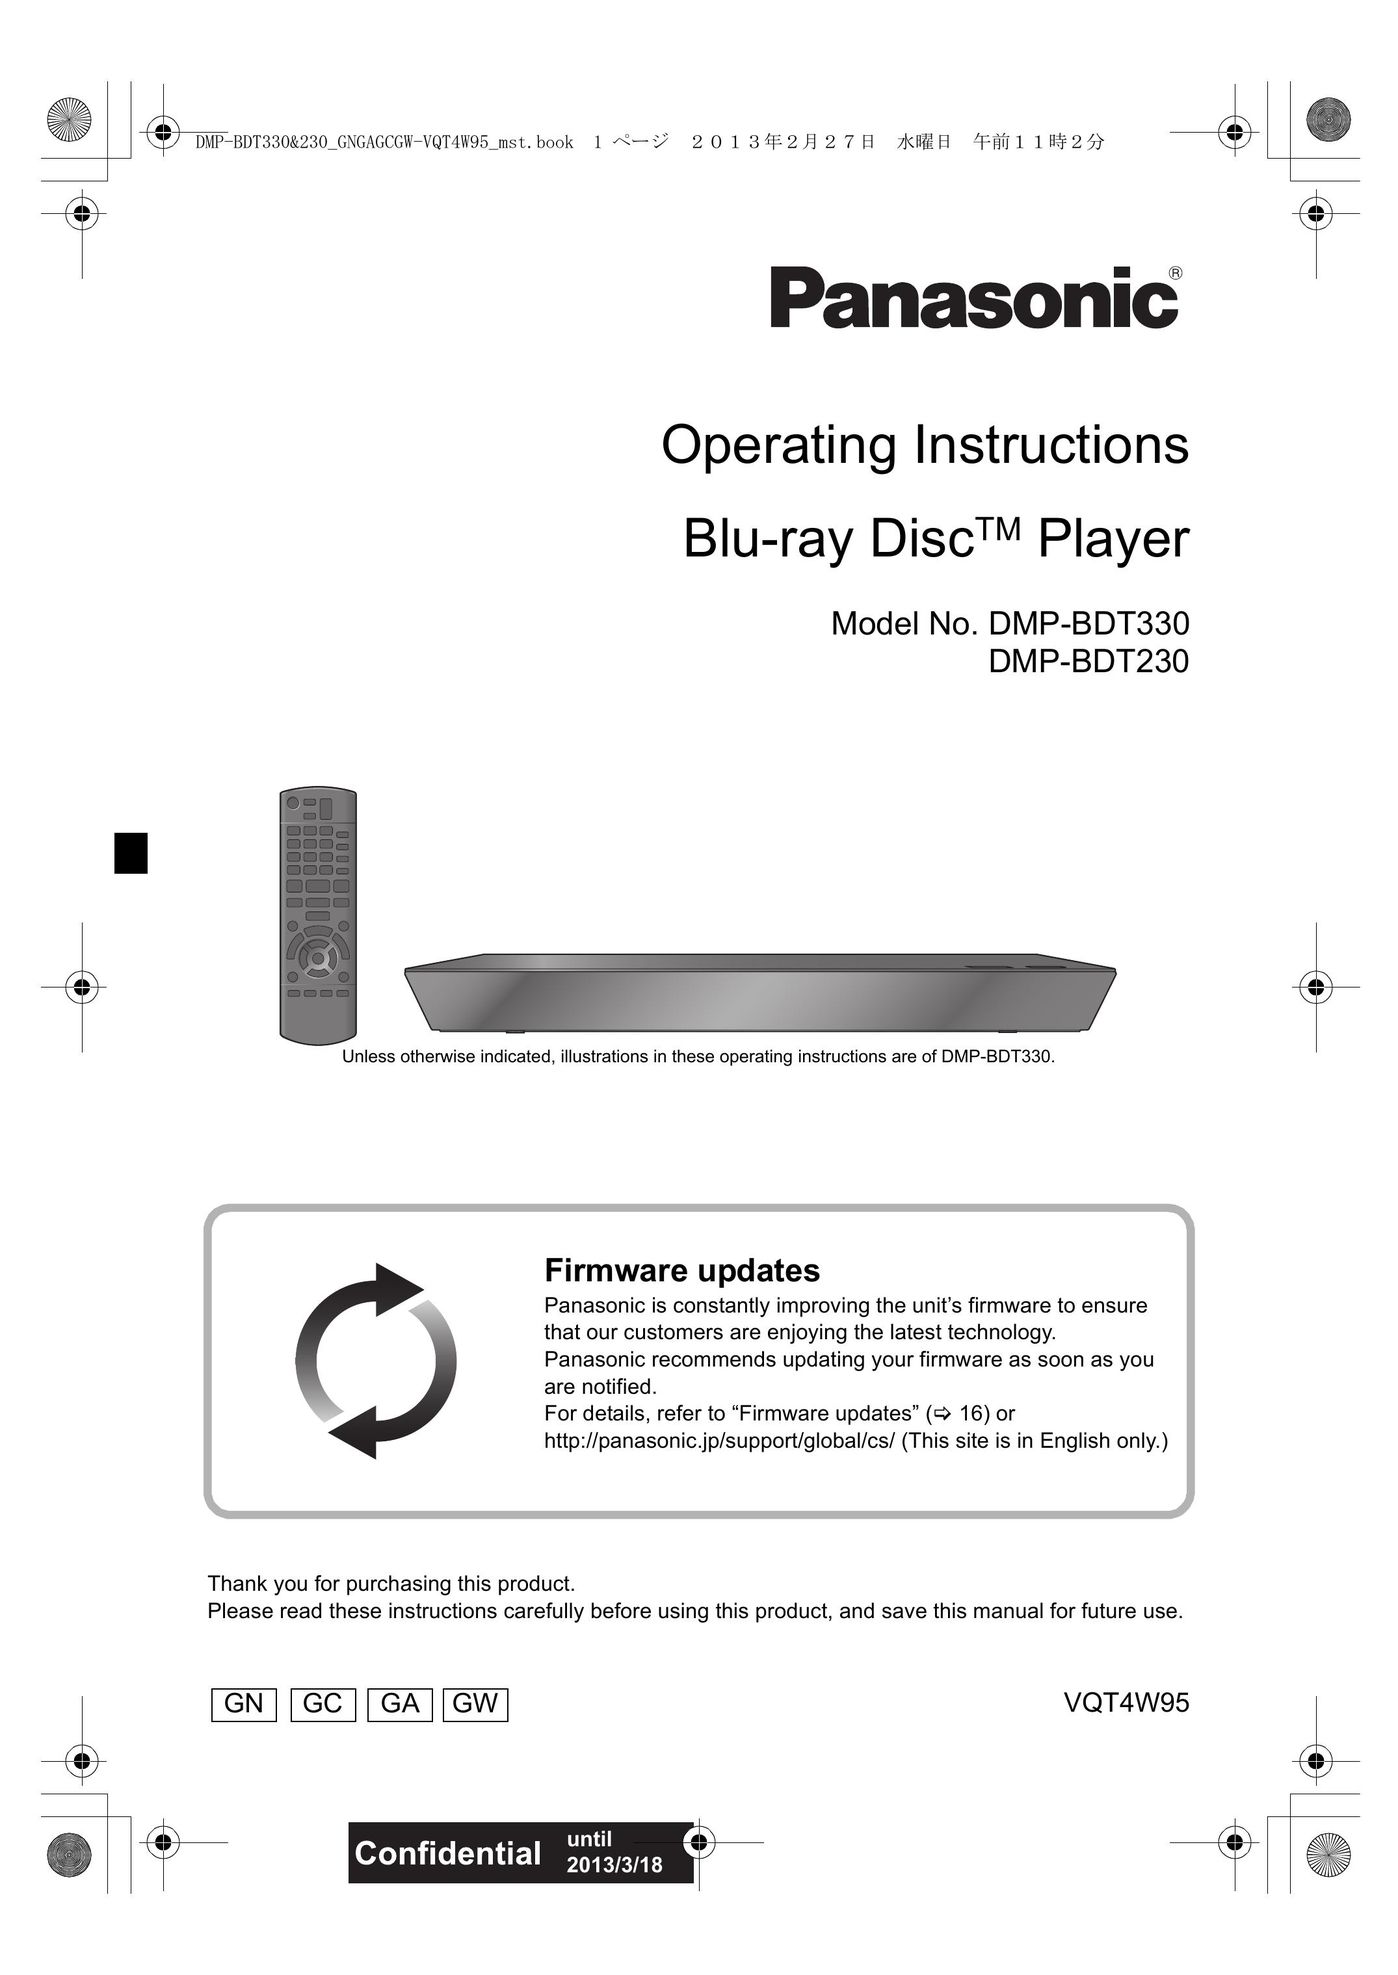 Panasonic DMP-BDT230 Blu-ray Player User Manual